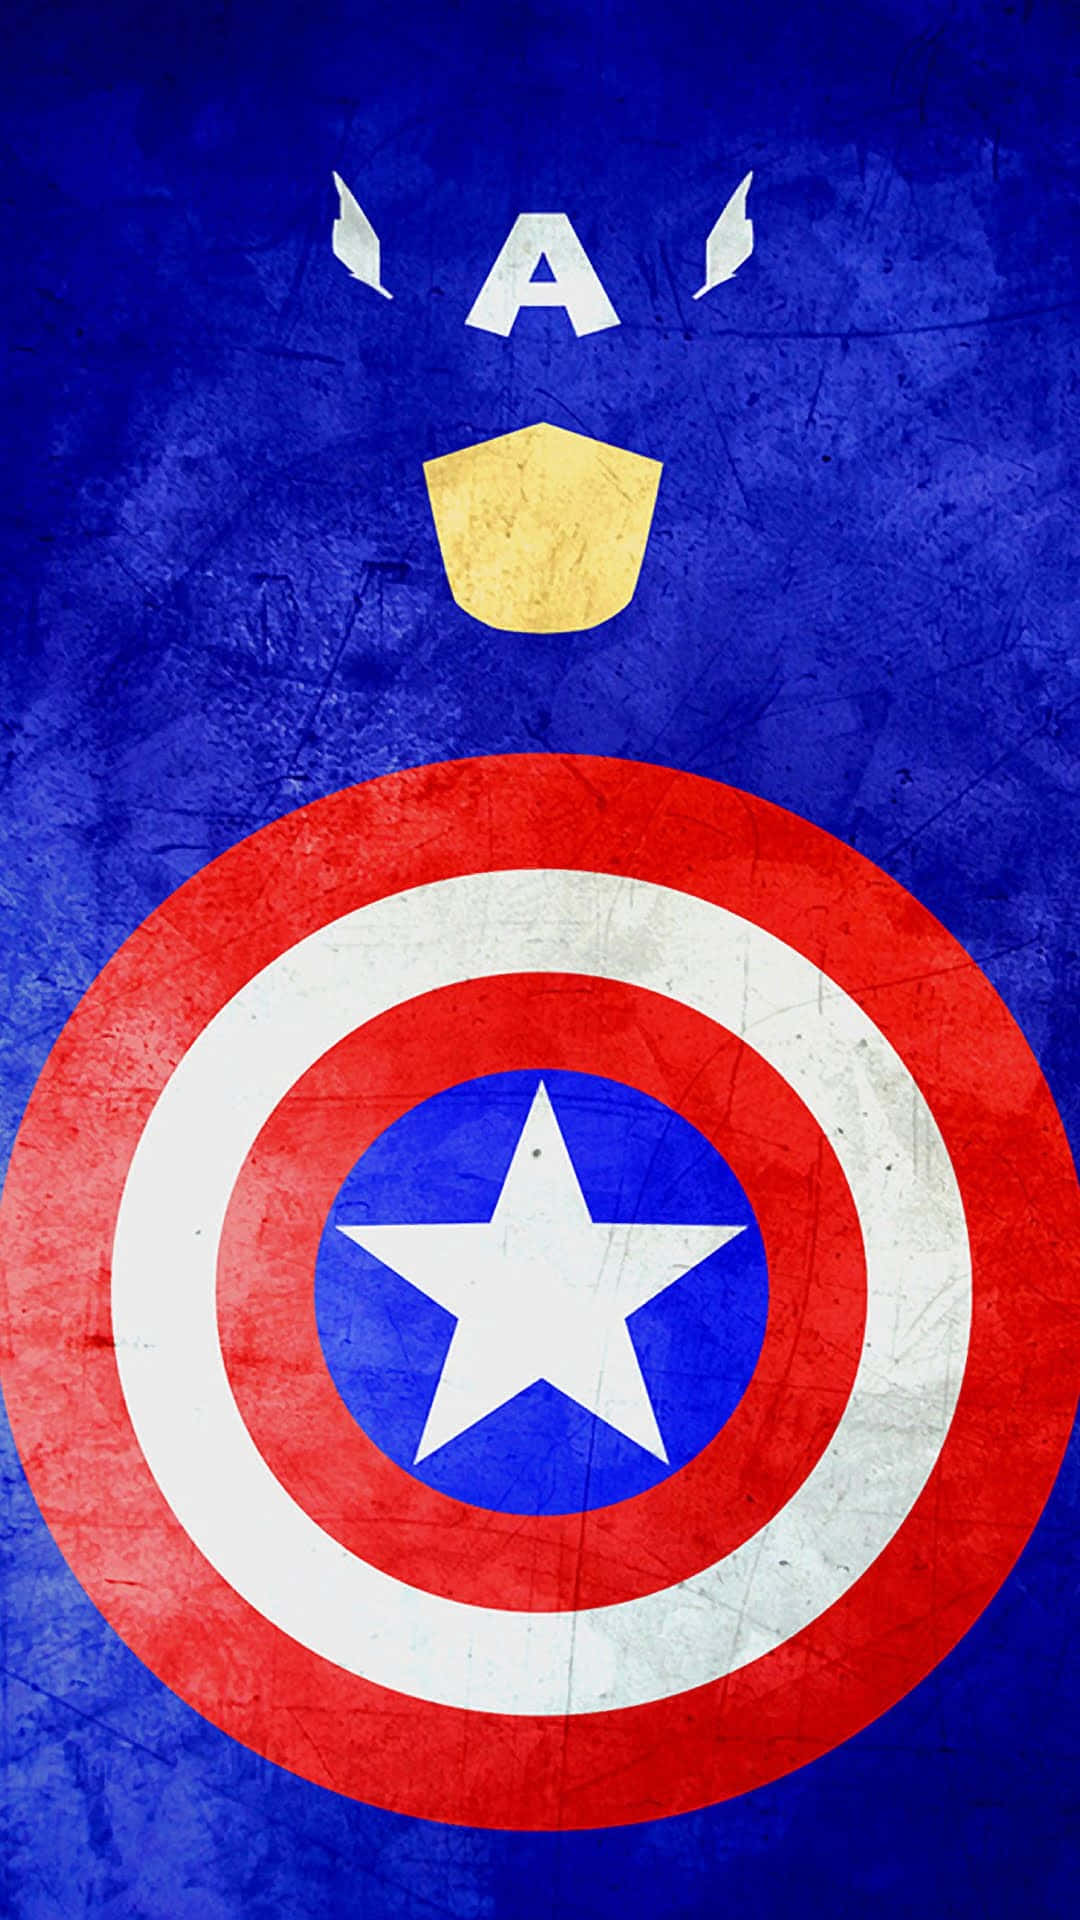 Prepáratepara La Batalla - Capitán América De Android.